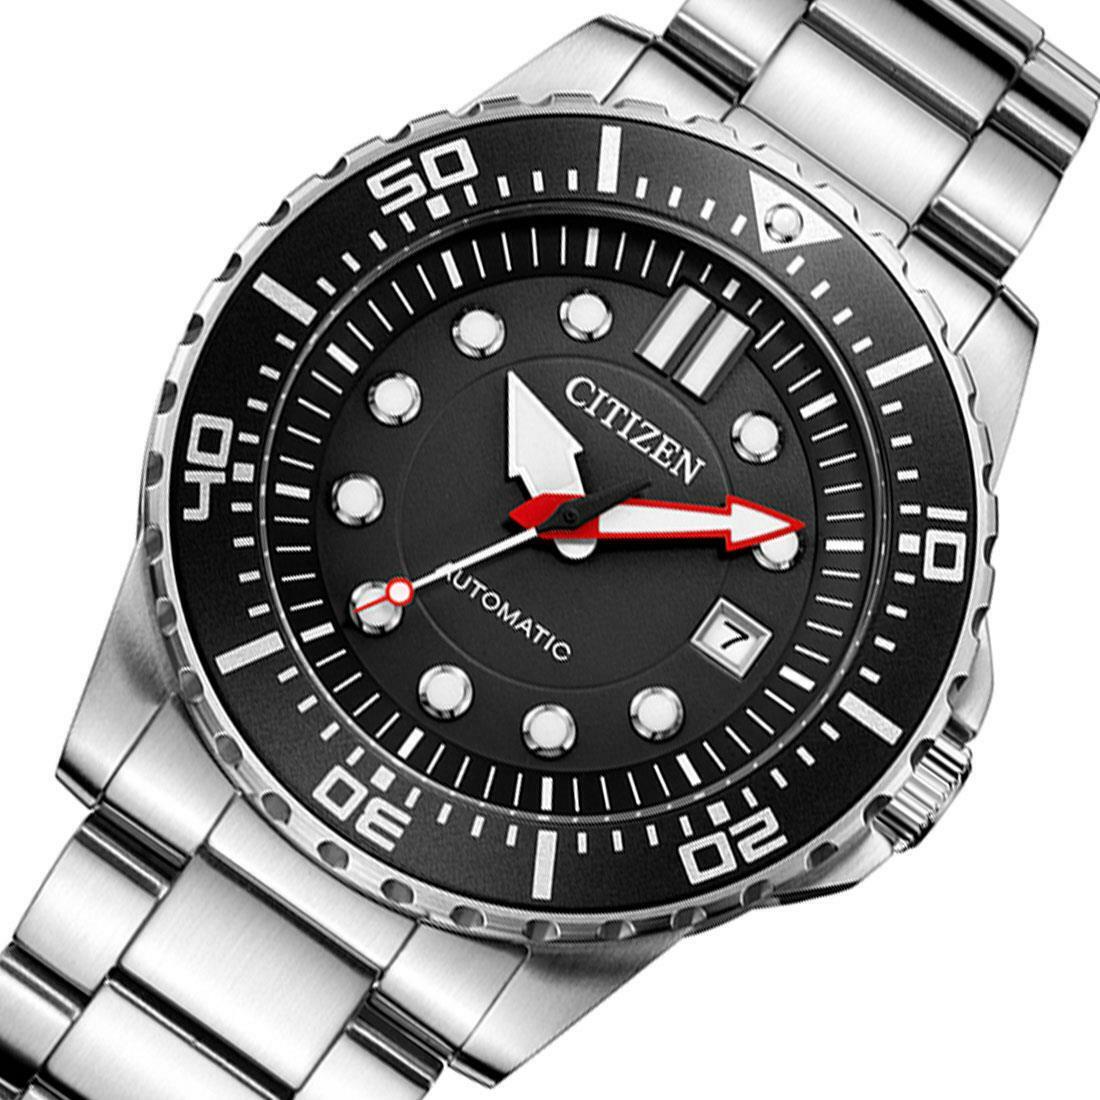 Citizen Mechanical Black Dial Silver Stainless Steel Watch For Men - NJ0120-81E